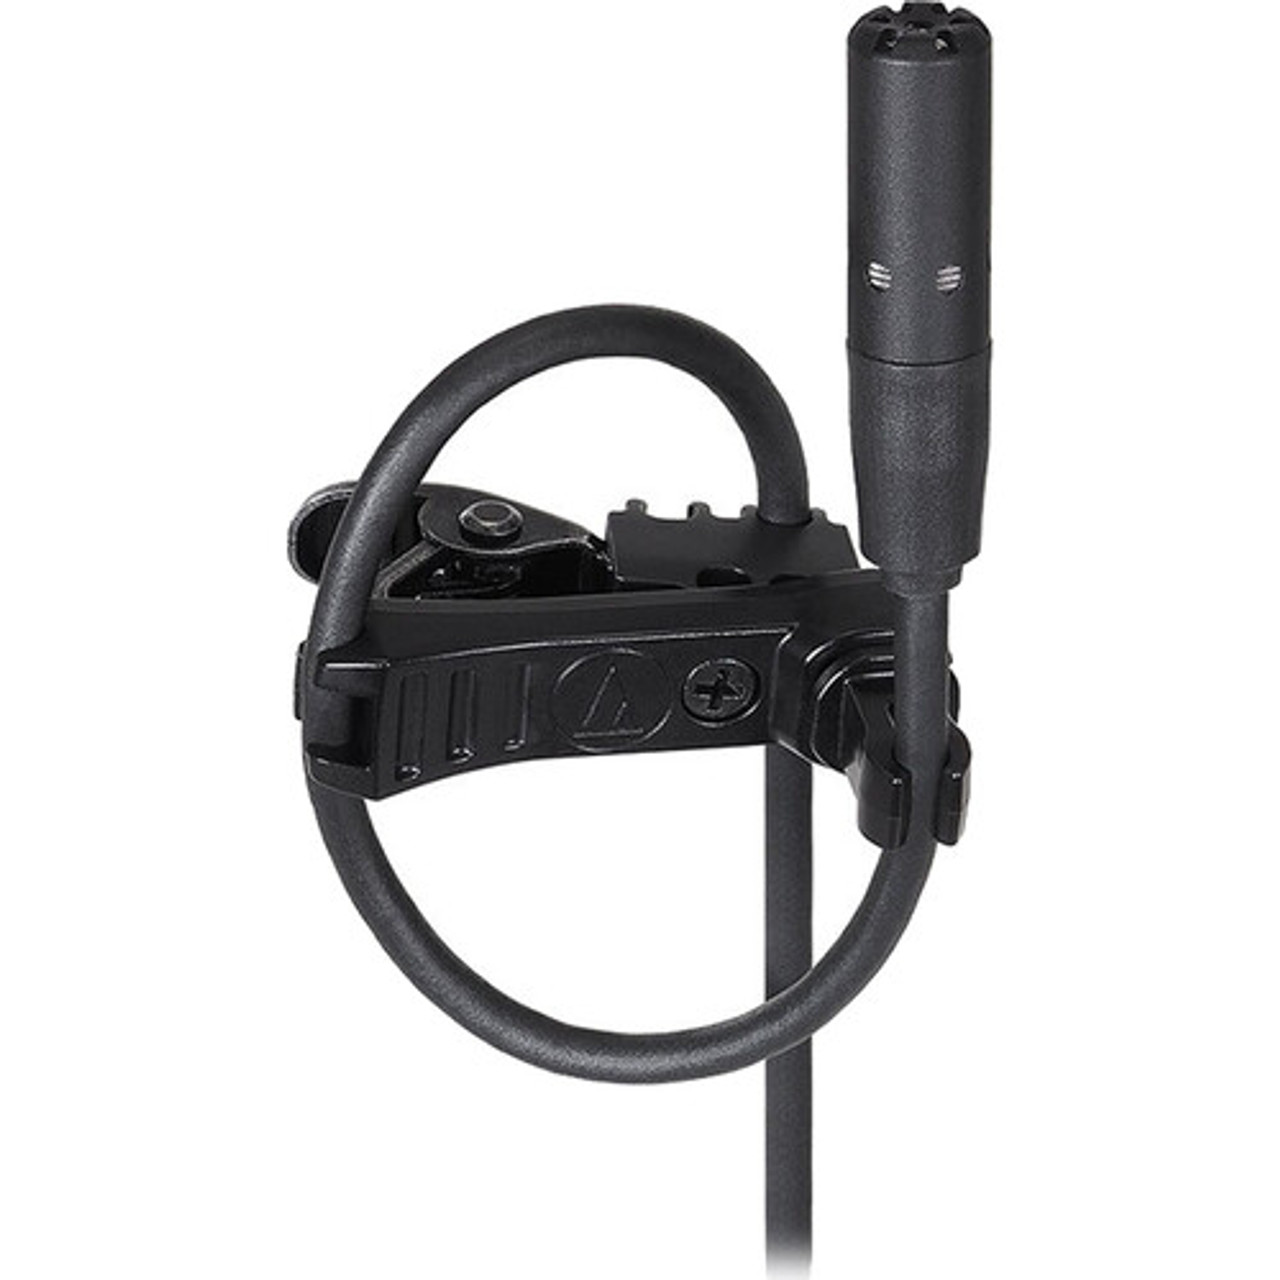 Audio-Technica BP898cT4 Subminiature Cardioid Lavalier Microphone (Black, TA4F Connector) (BP898CT4)

